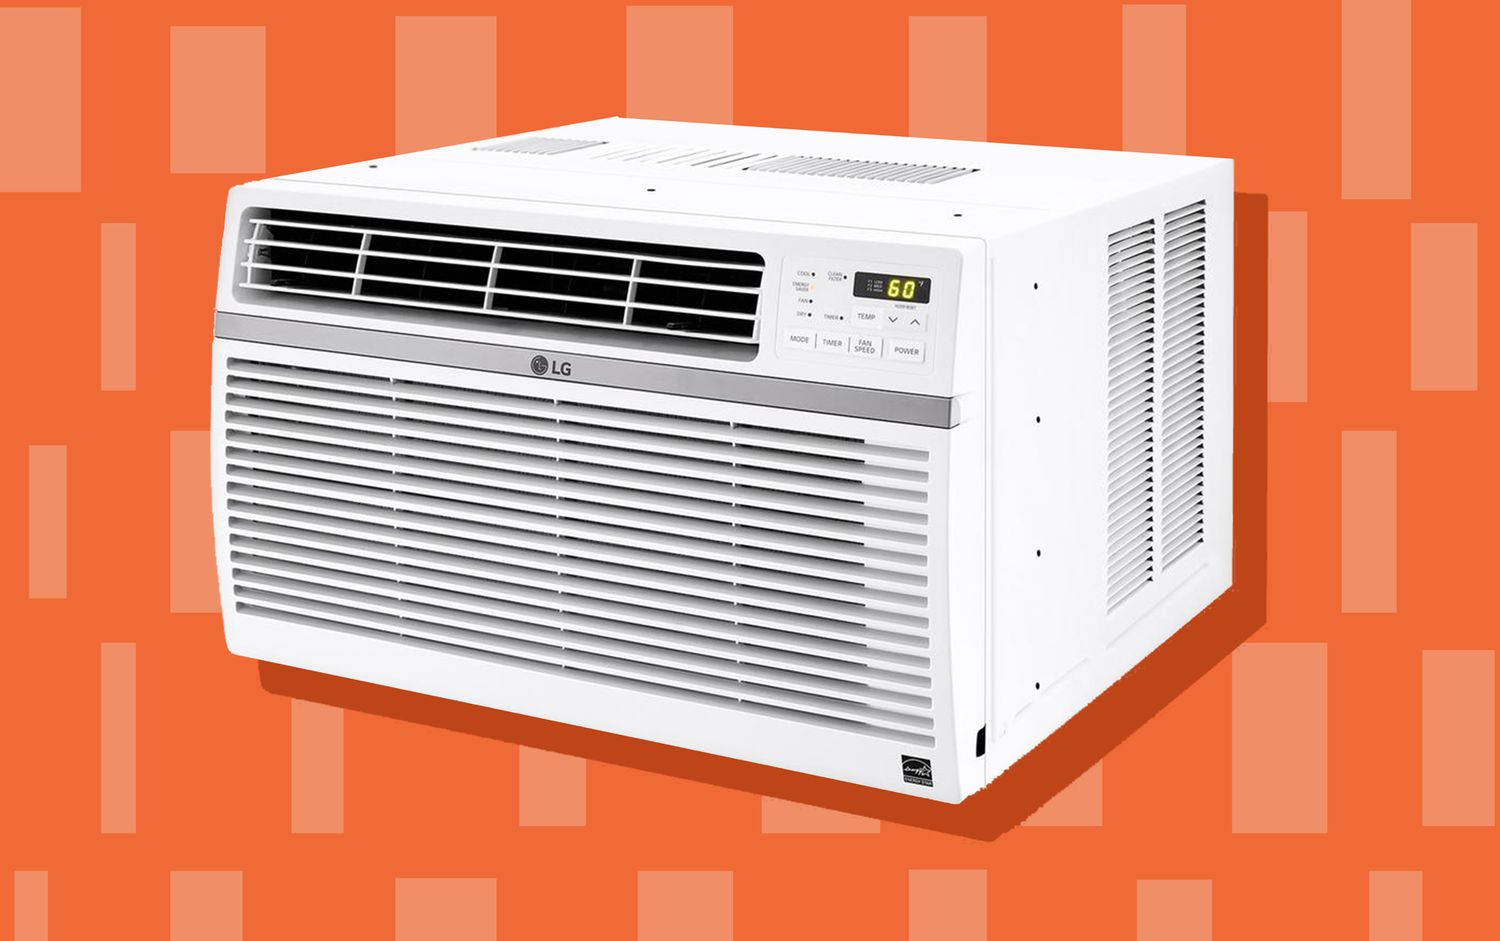 LG window air conditioner